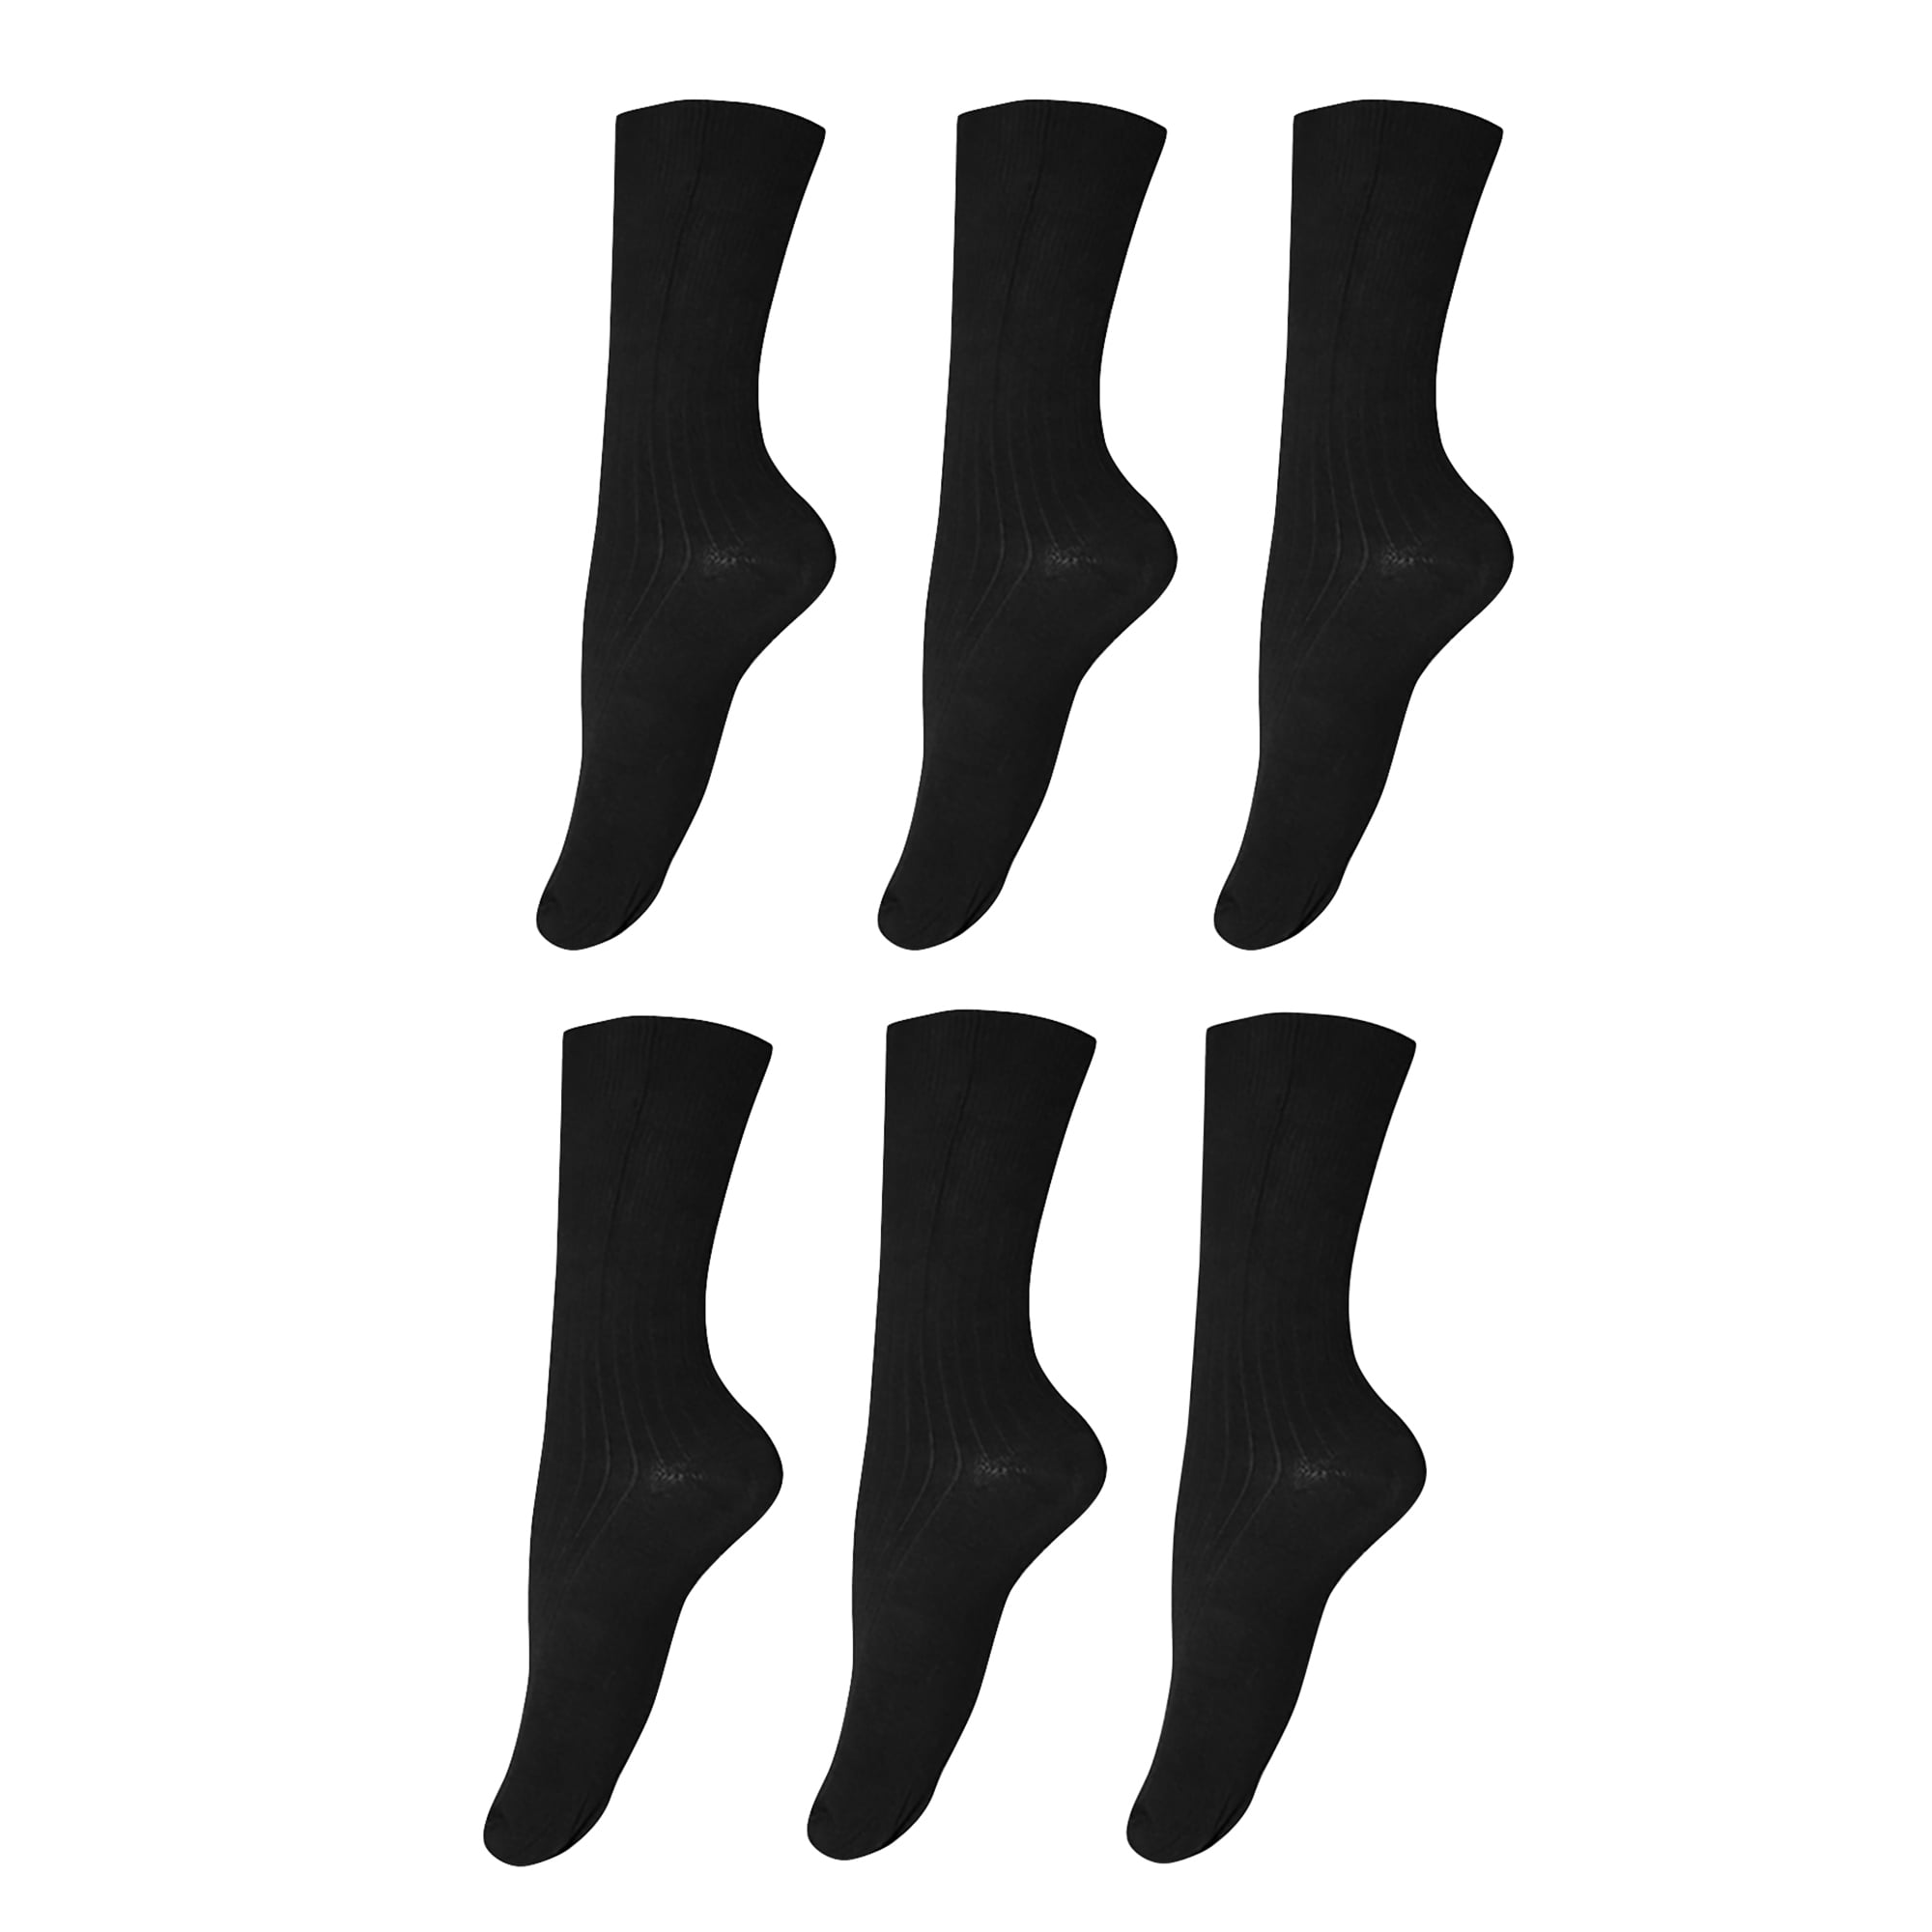 12 pairs of long mens socks Black Navy and Grey 100% cotton 